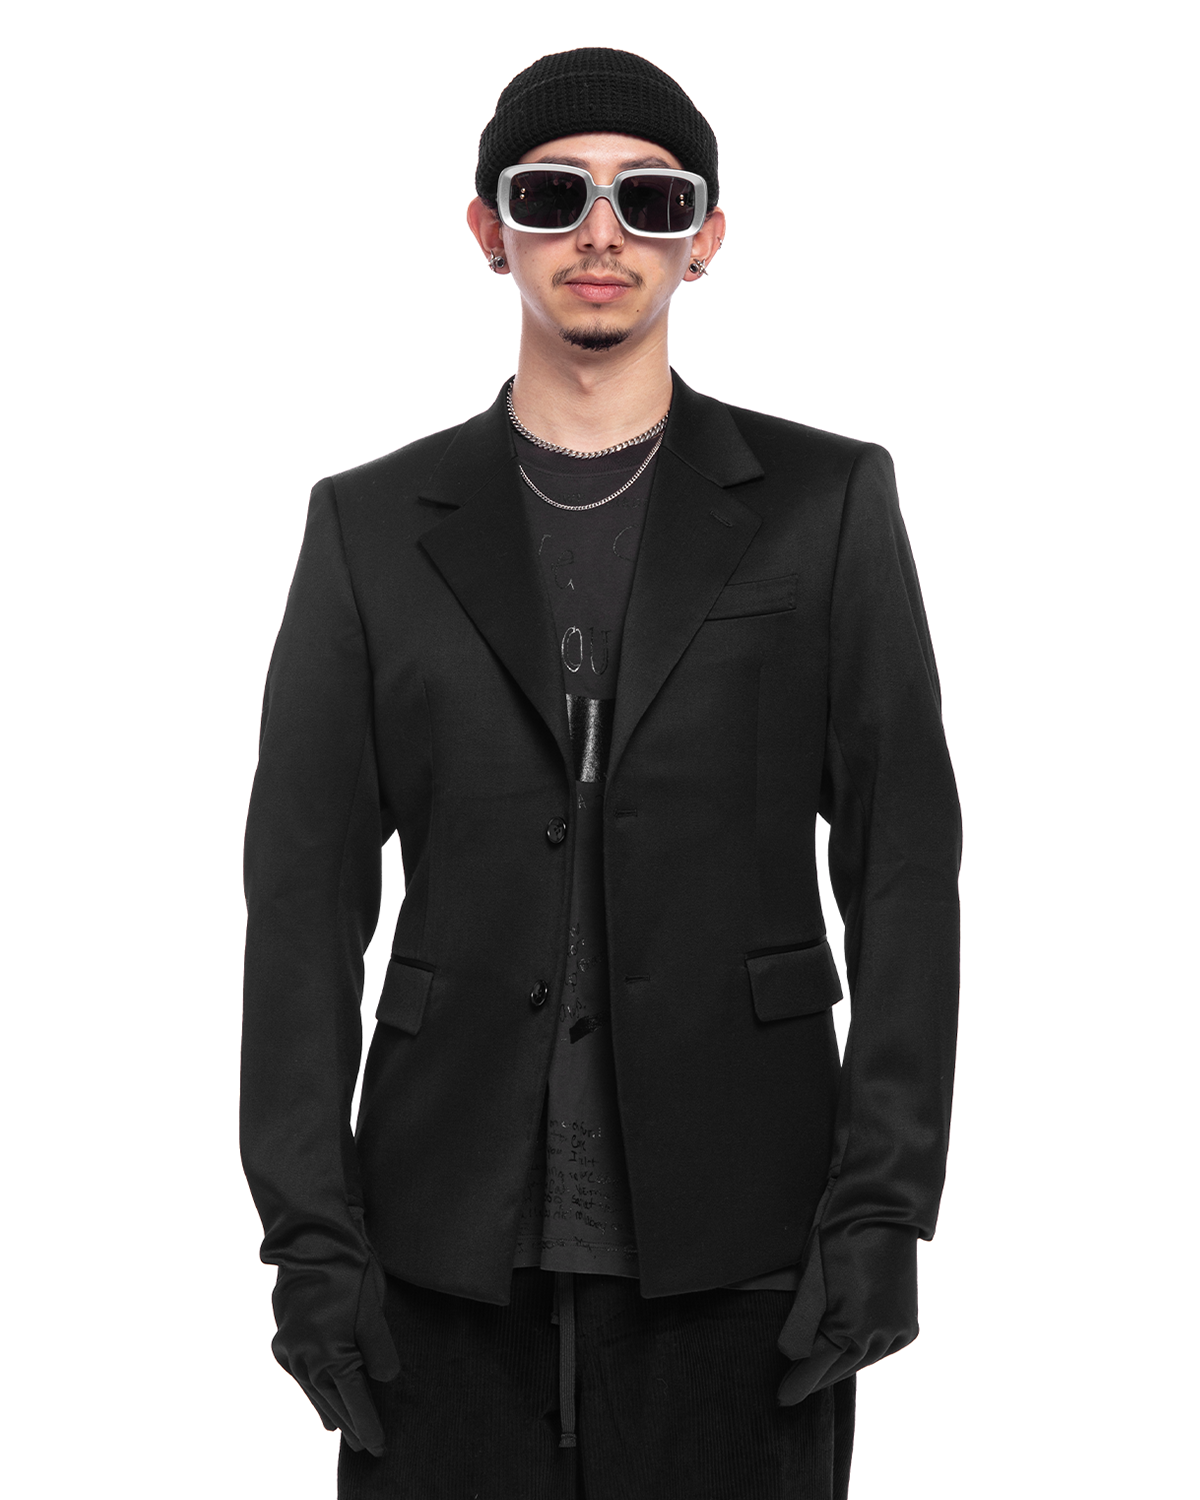 Glove Sleeve Tailored Jacket Black